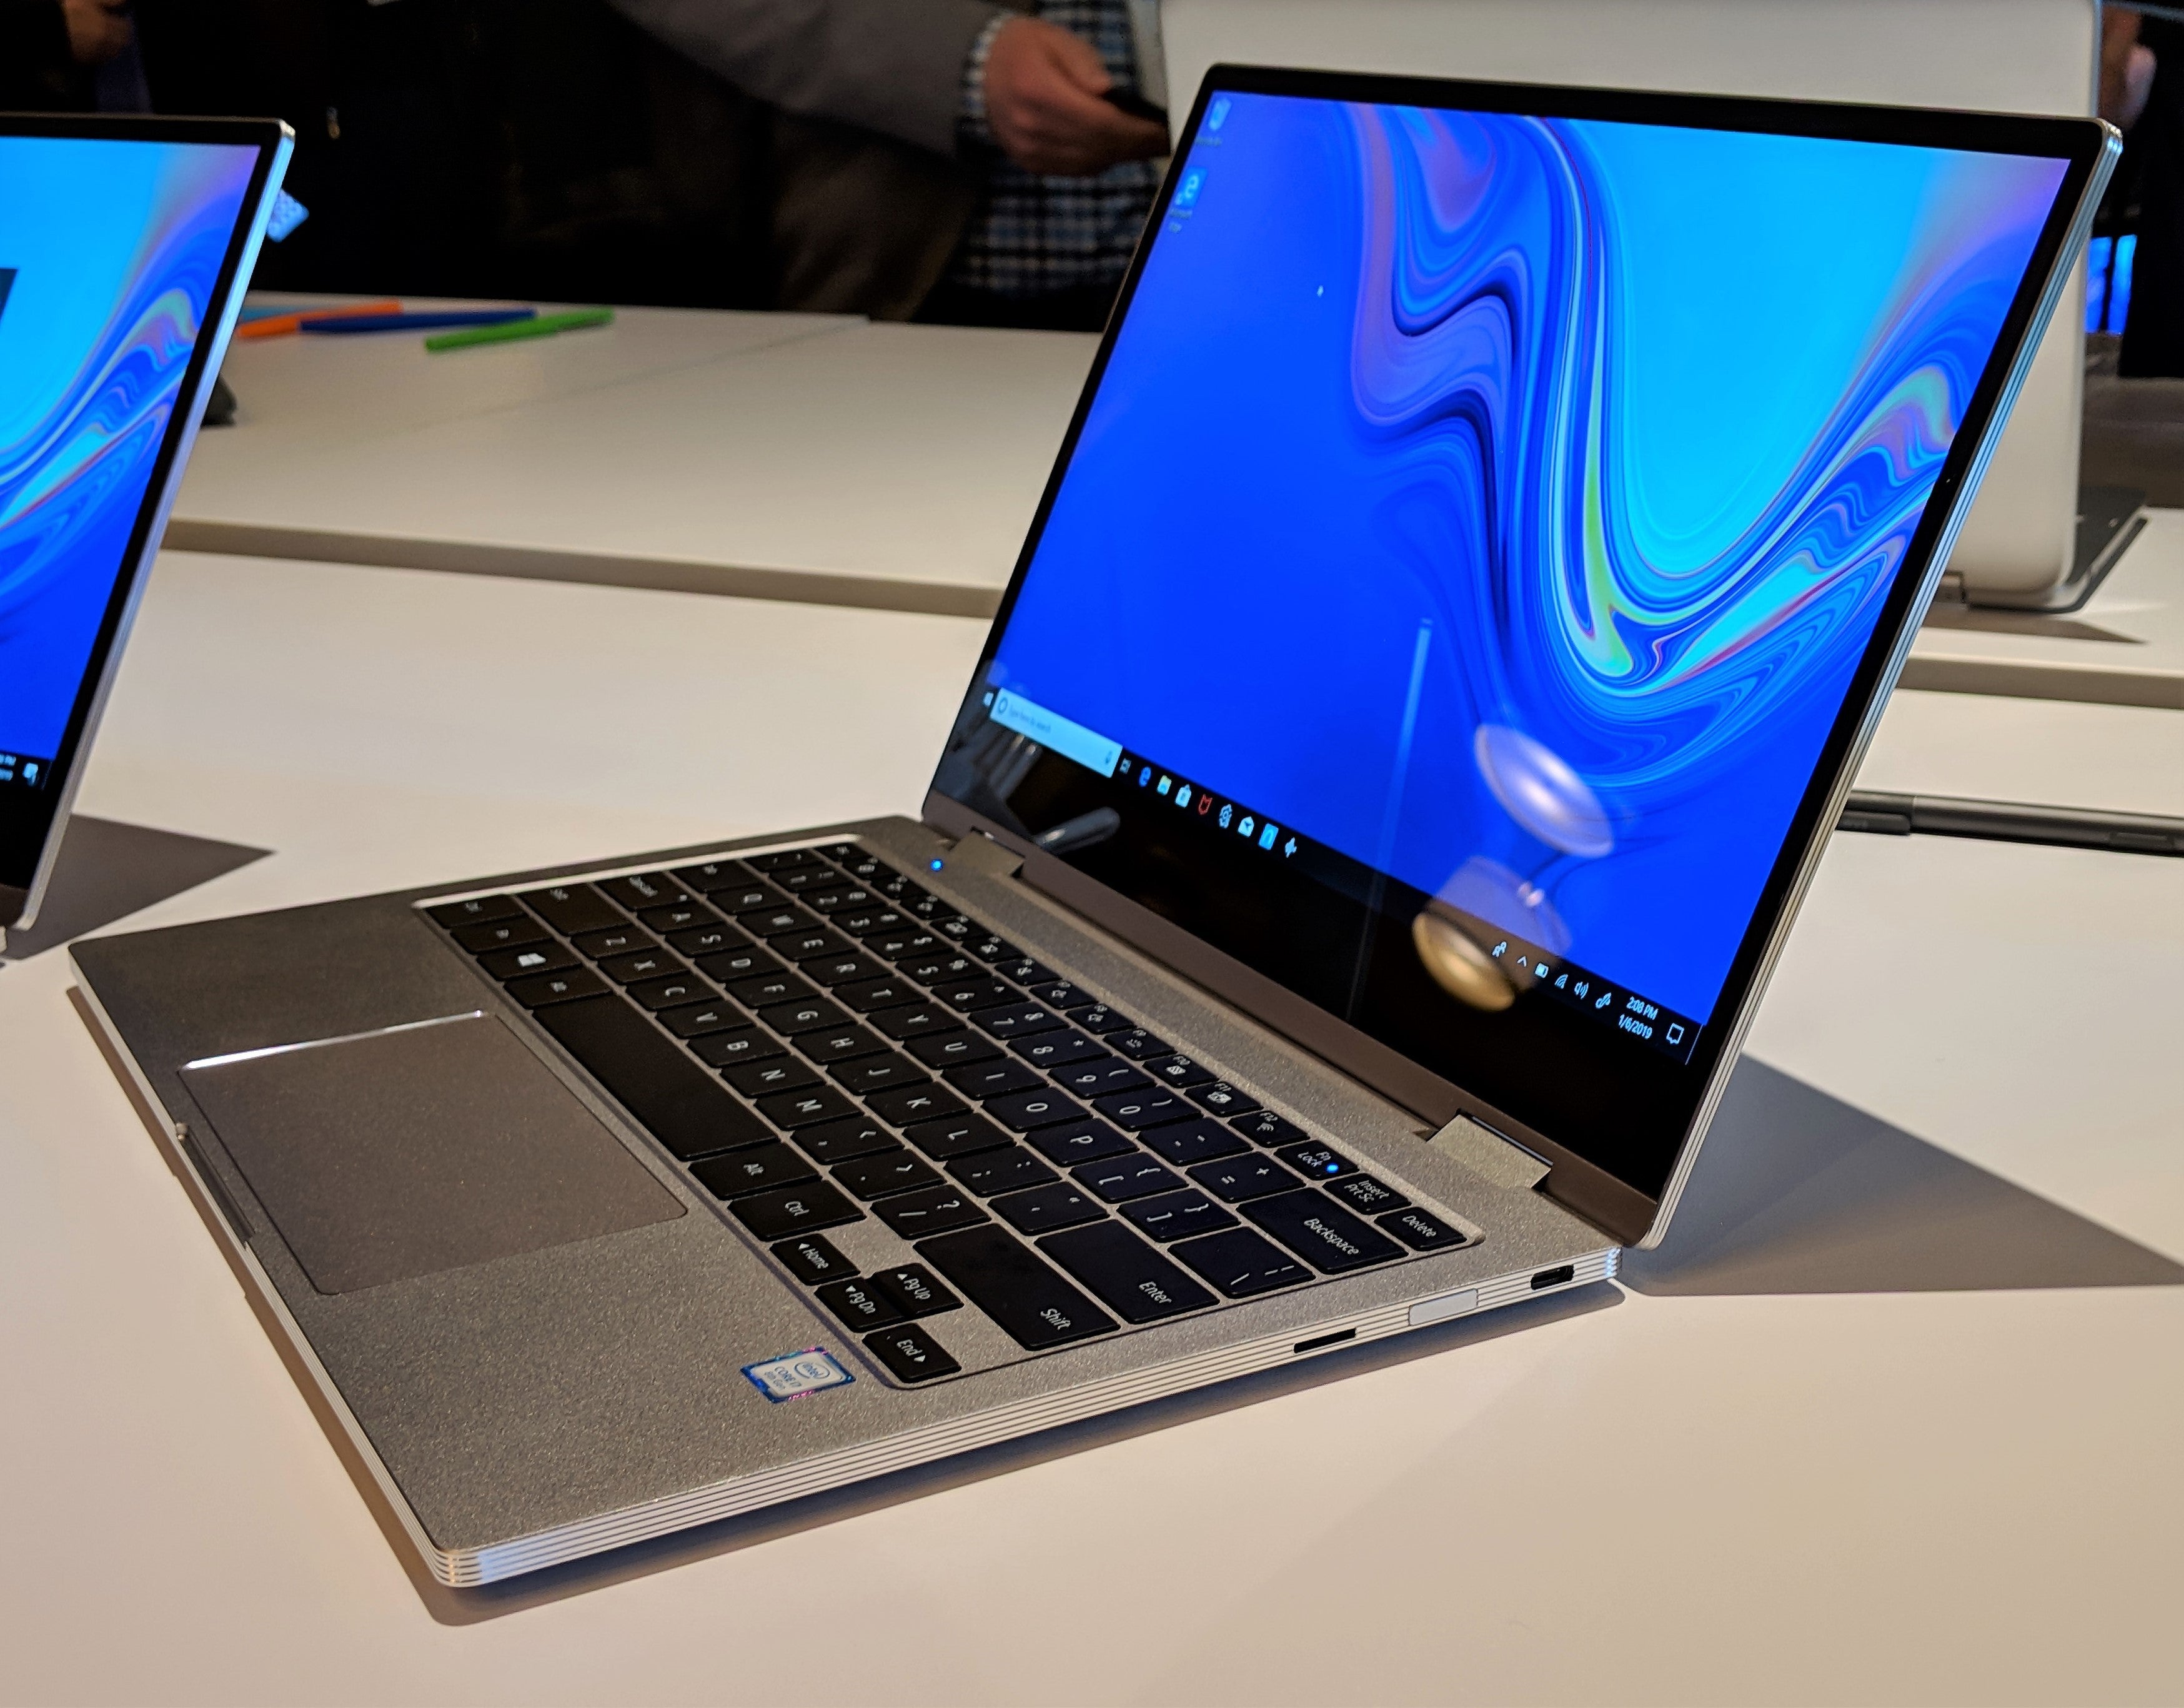 Samsung's stylish Notebook 9 Pro adds Intel's Whiskey Lake CPU and